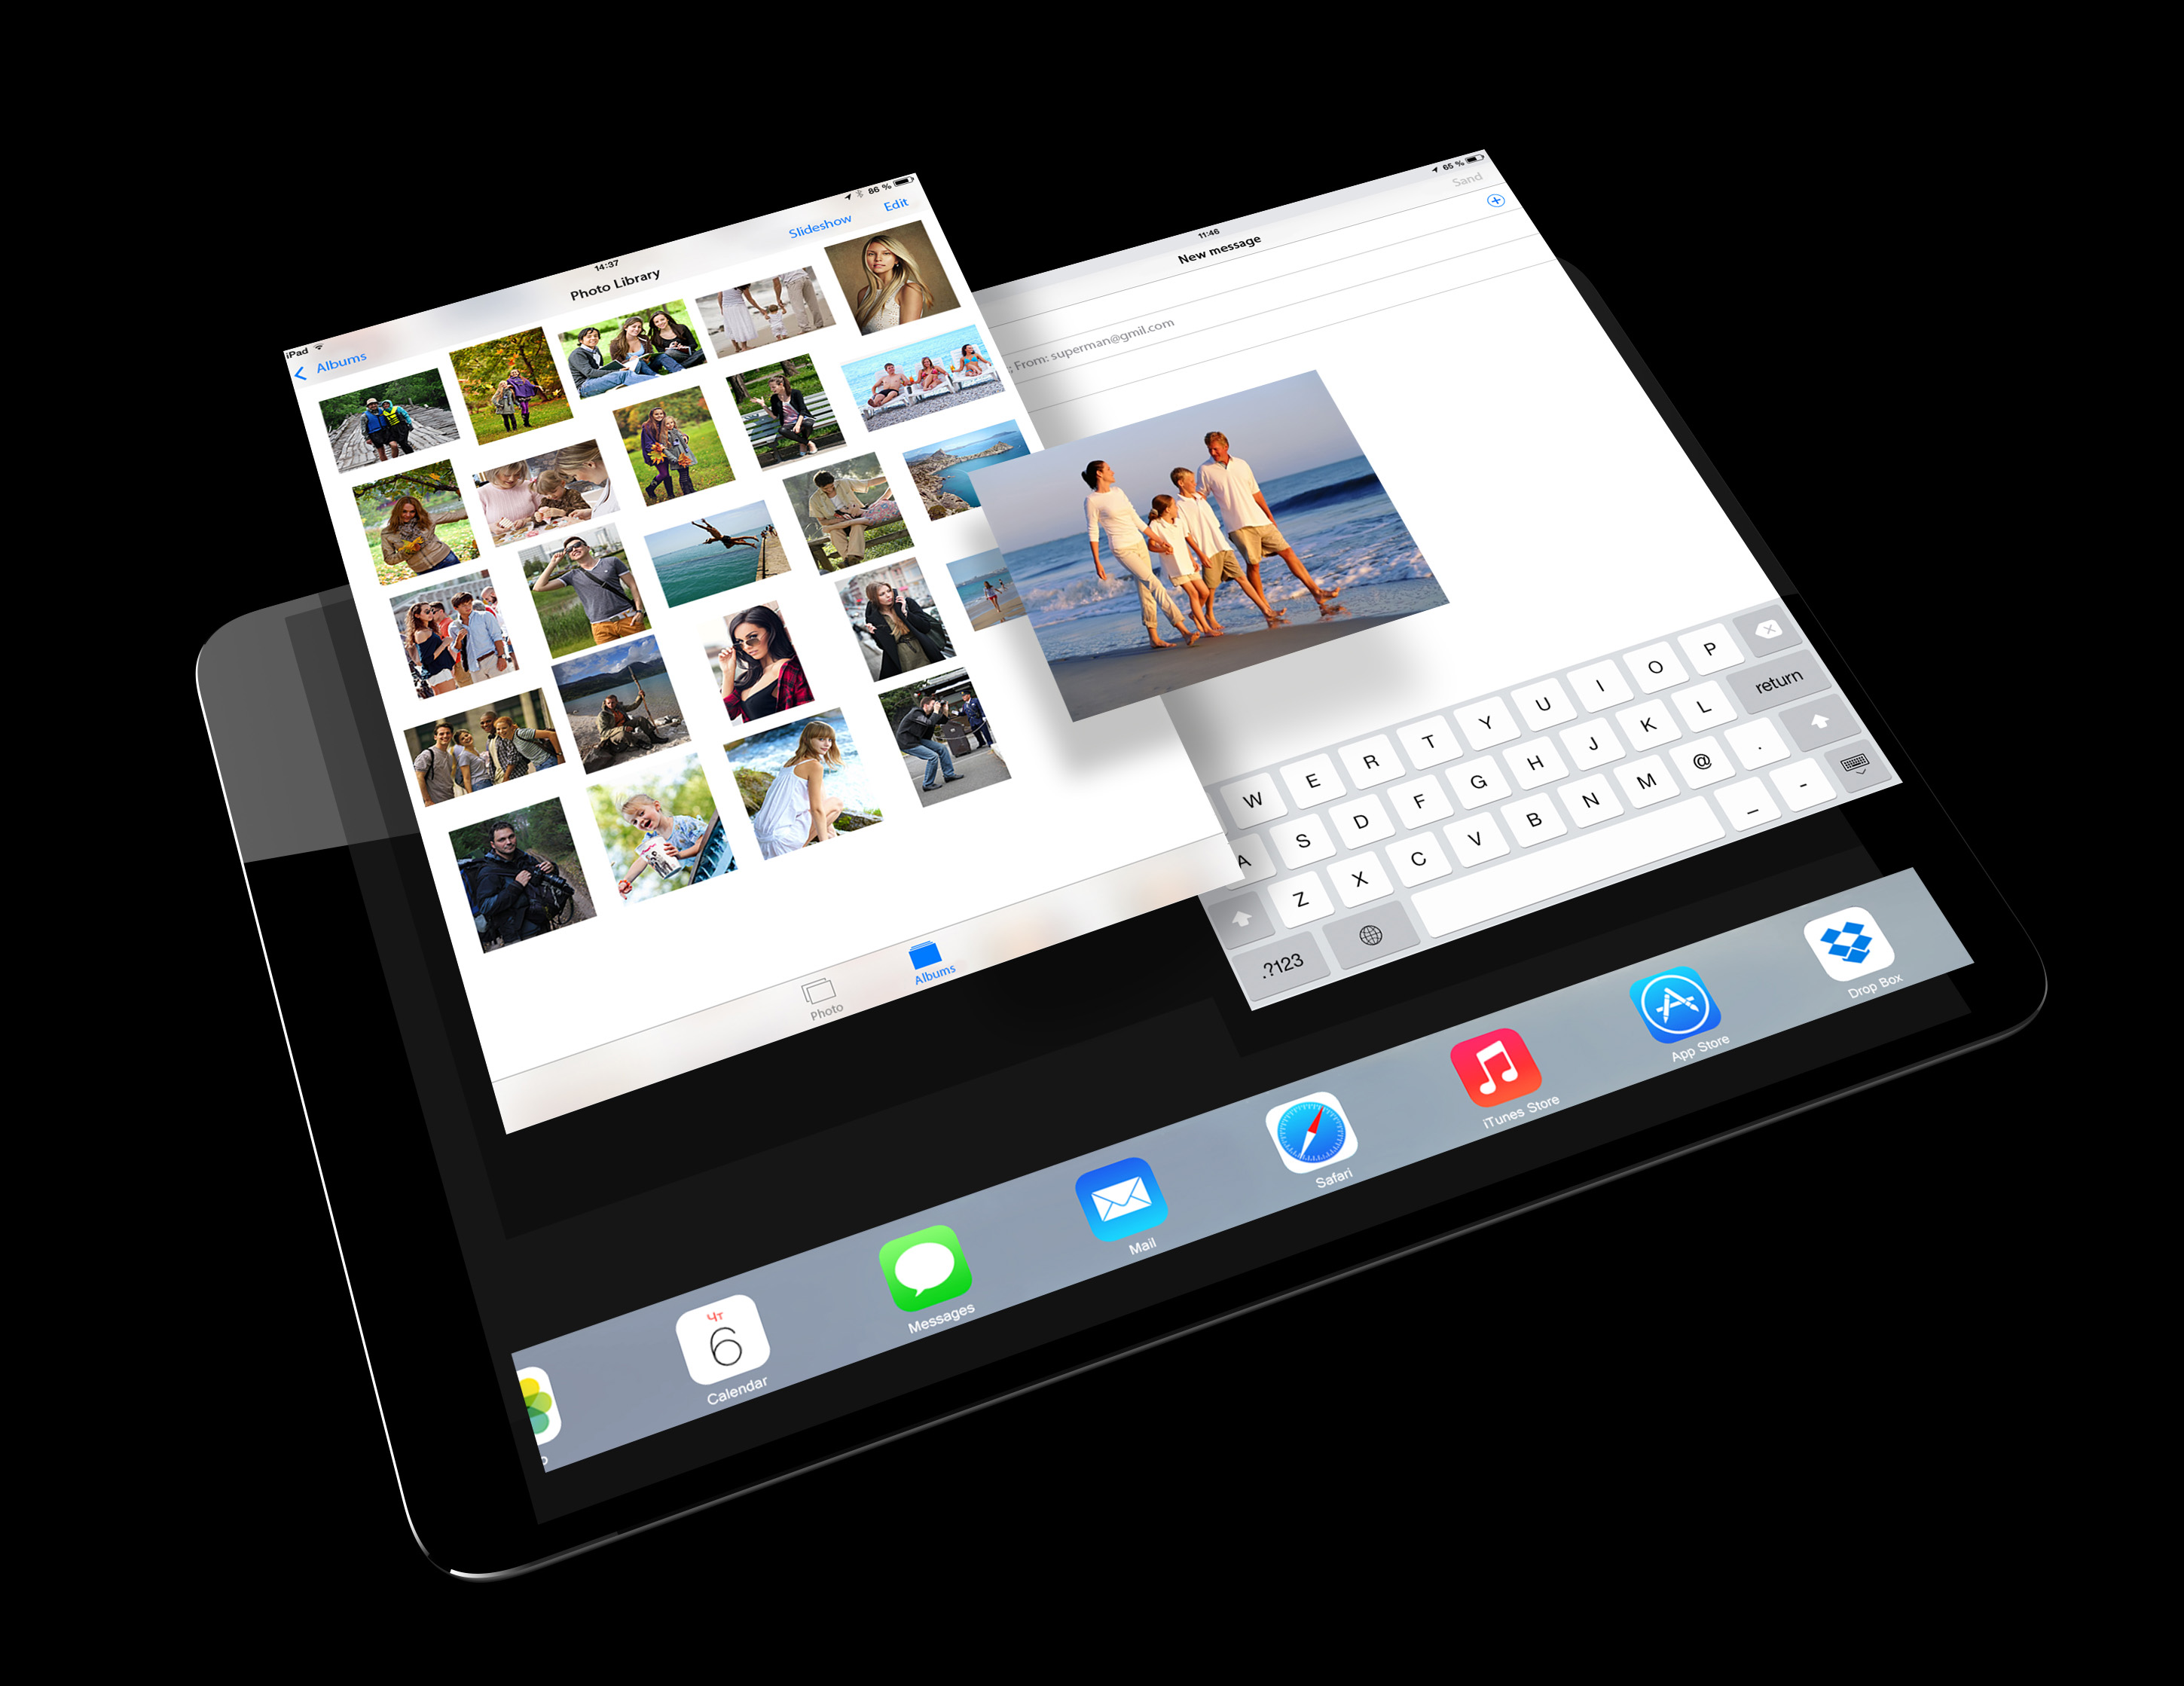 iPad pro concept (Ramotion, Multitasking view)